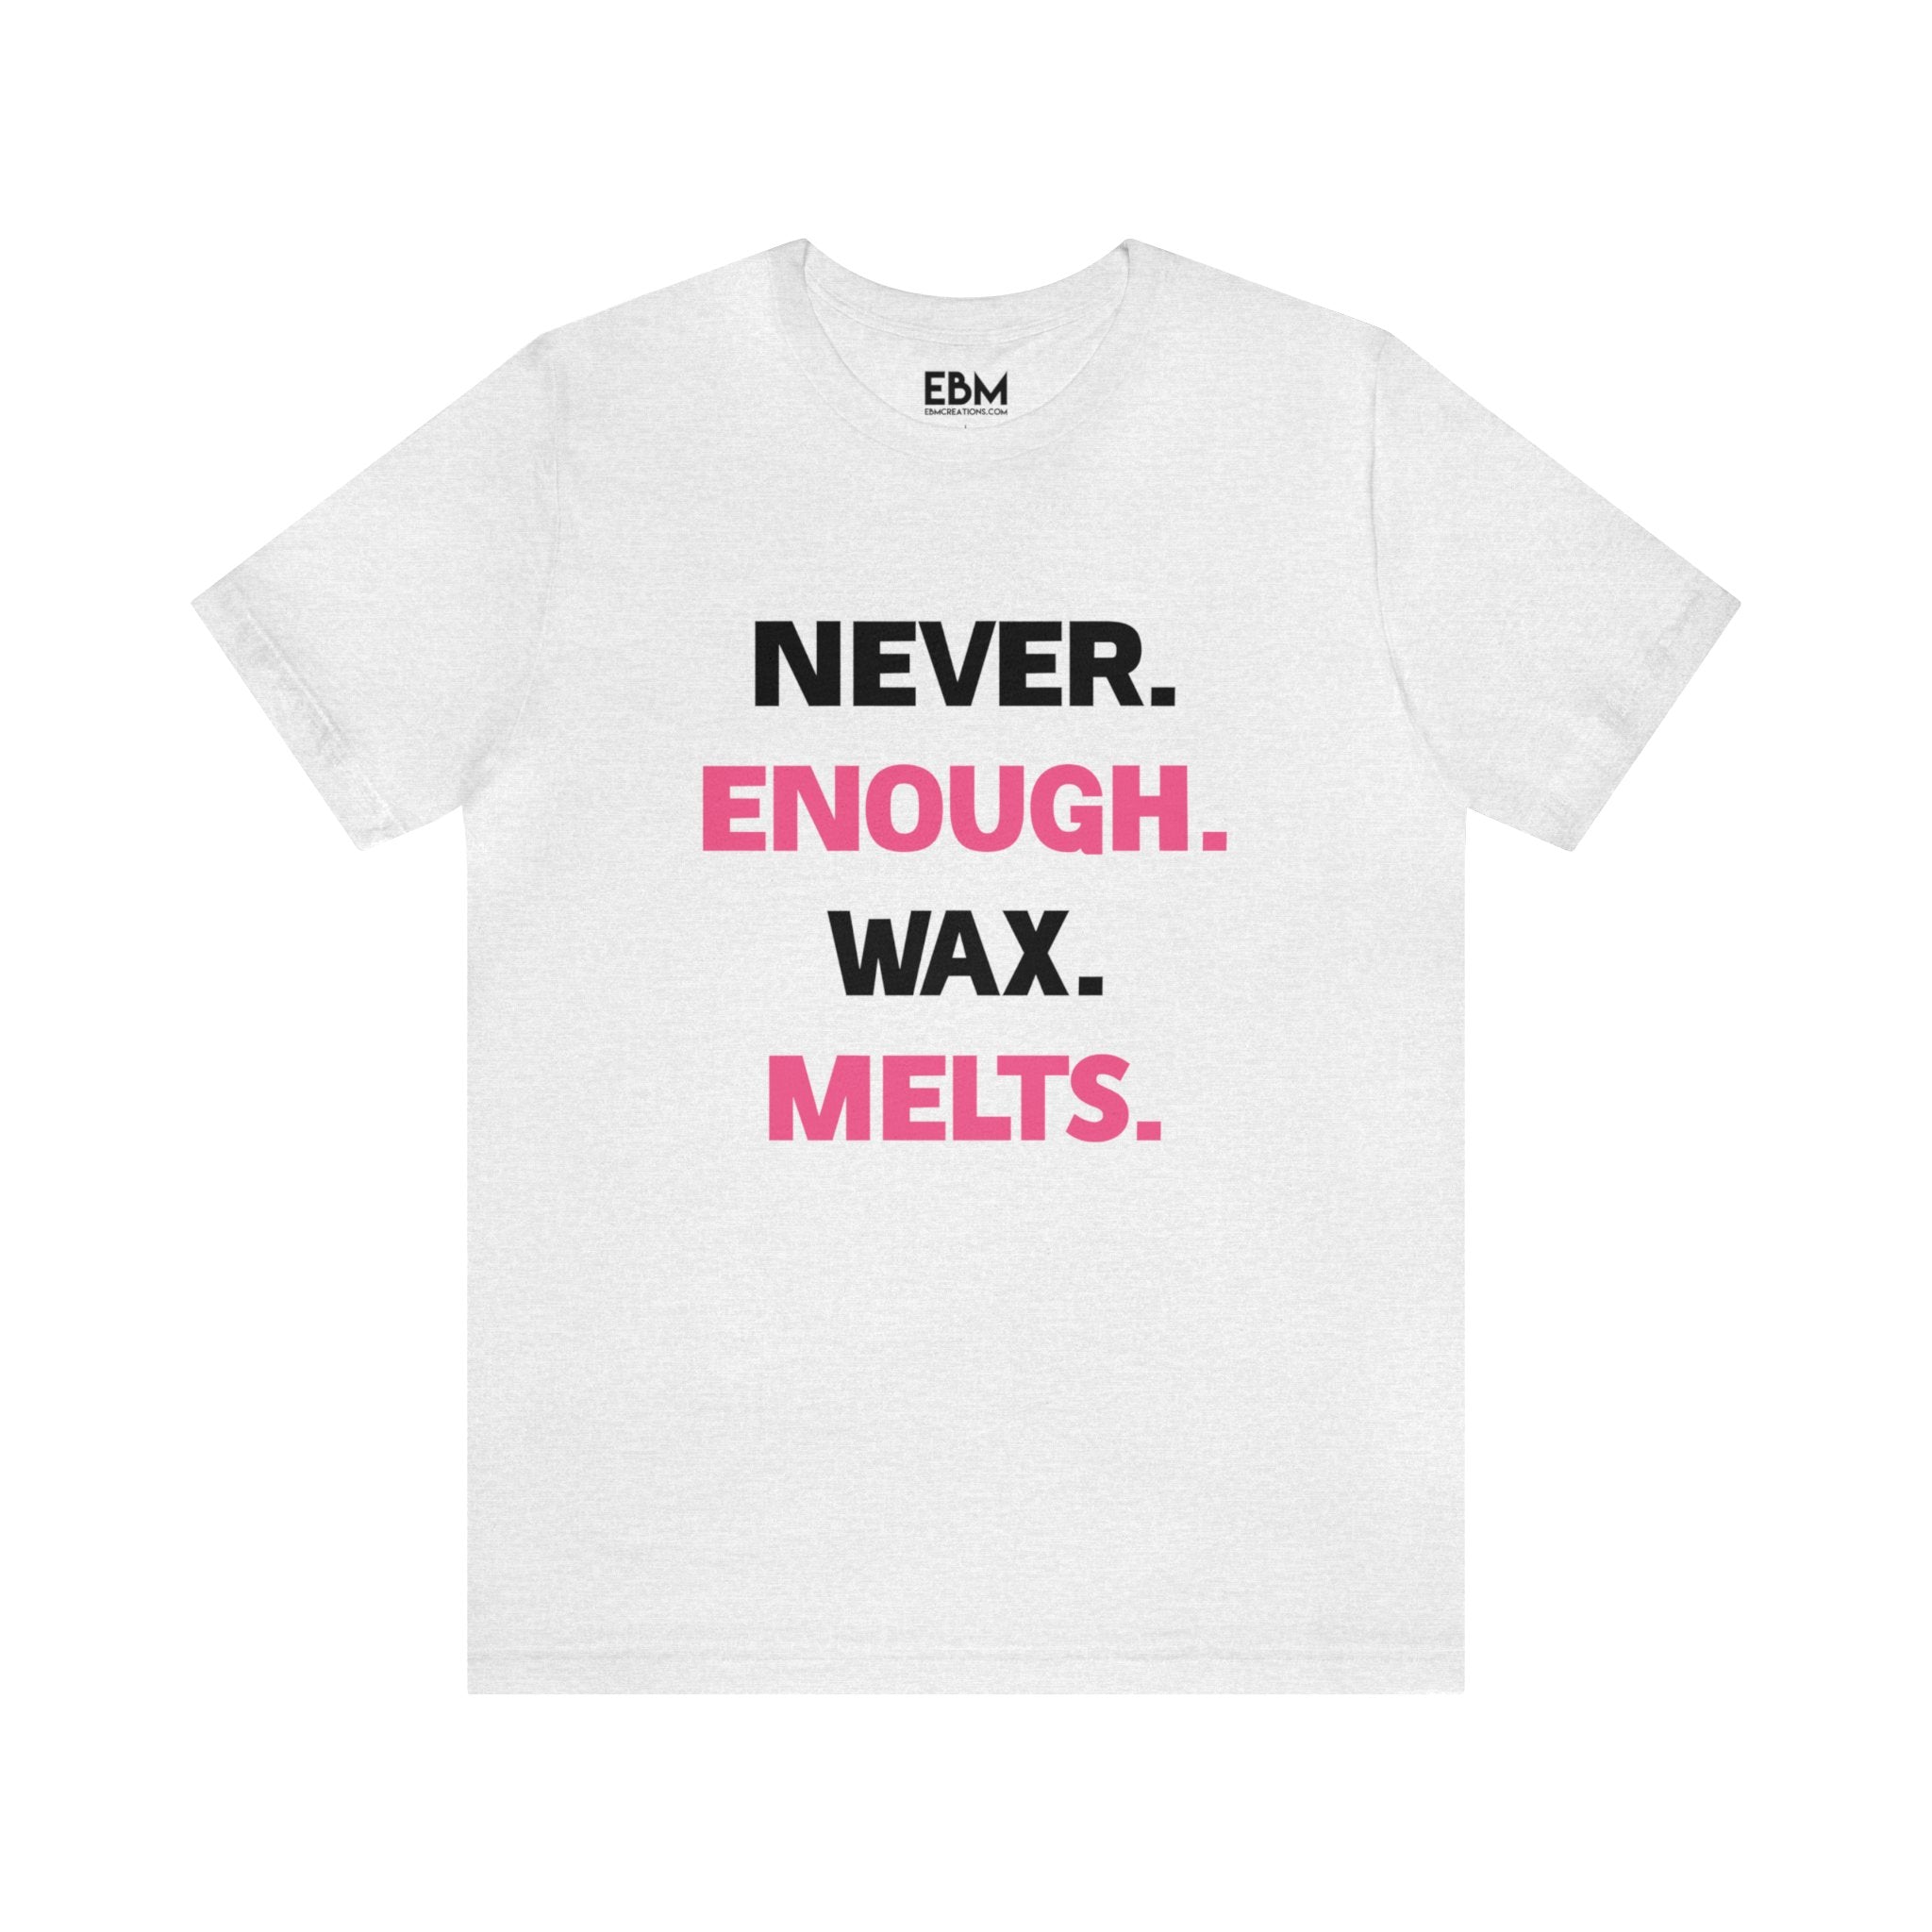 "Never. Enough. Wax. Melts." - Unisex Jersey Short Sleeve Tee